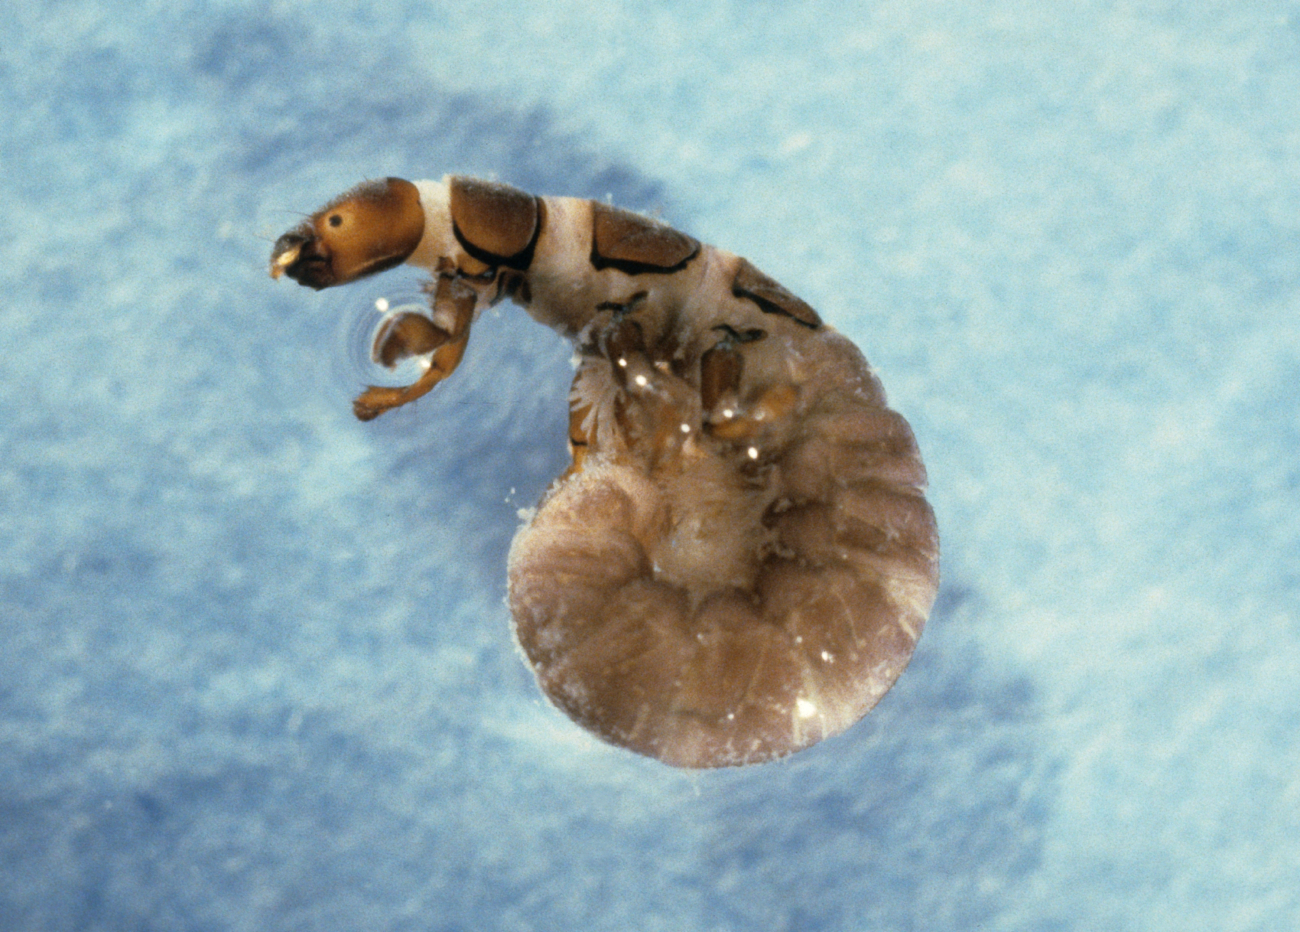 Caddis fly larva (Hydropsyche sp